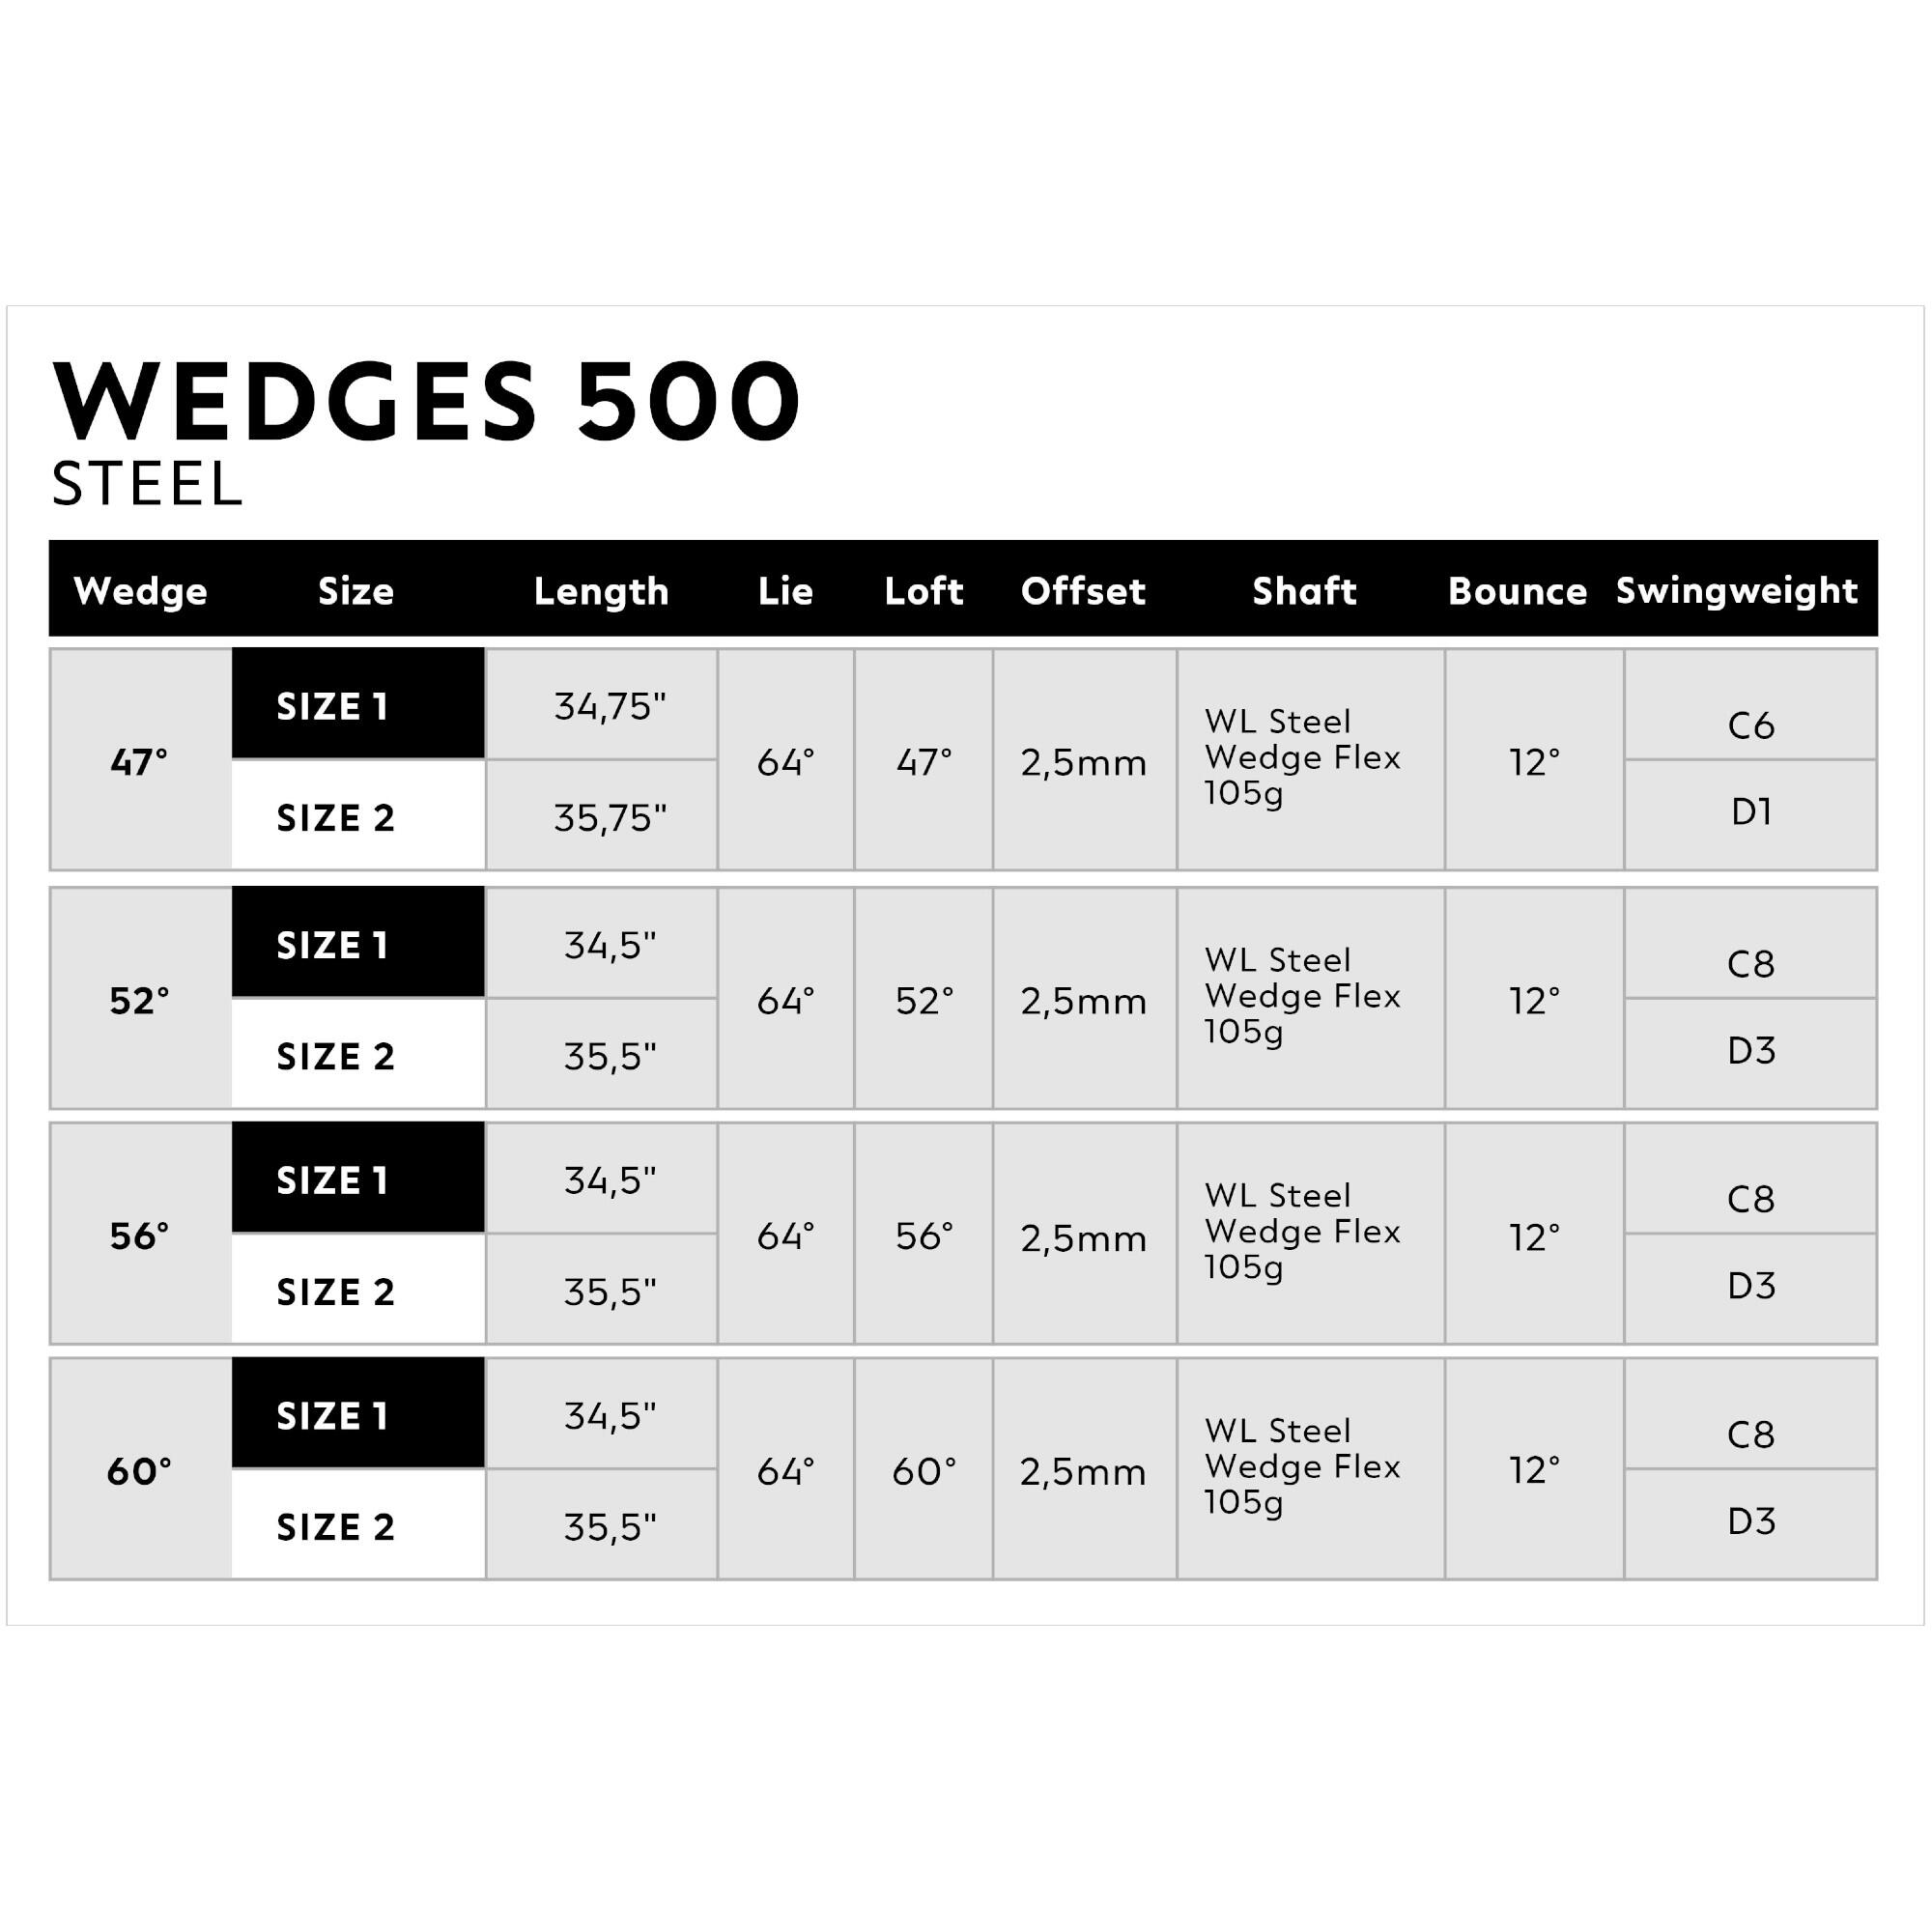 Golf wedge left handed size 2 steel - INESIS 500 8/8